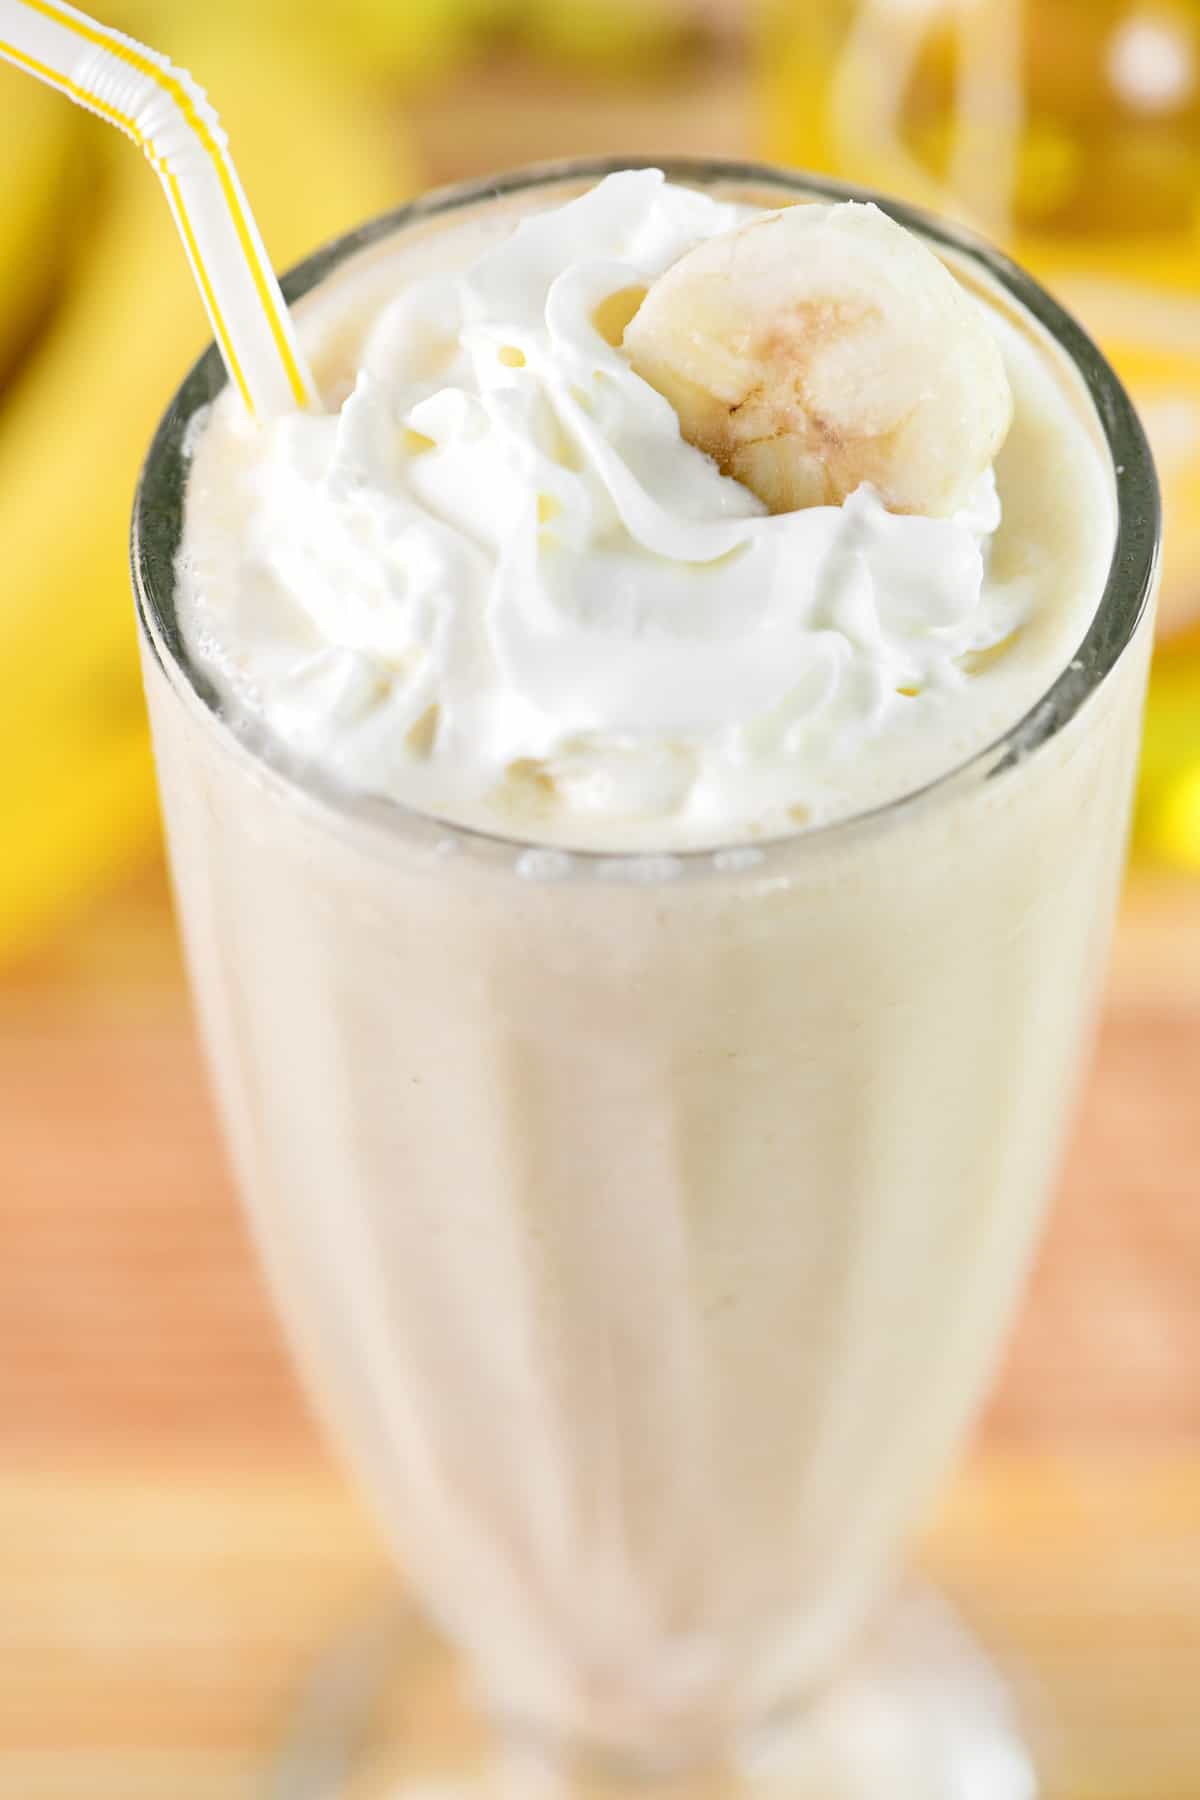 Banana milkshake with whipped cream on top.